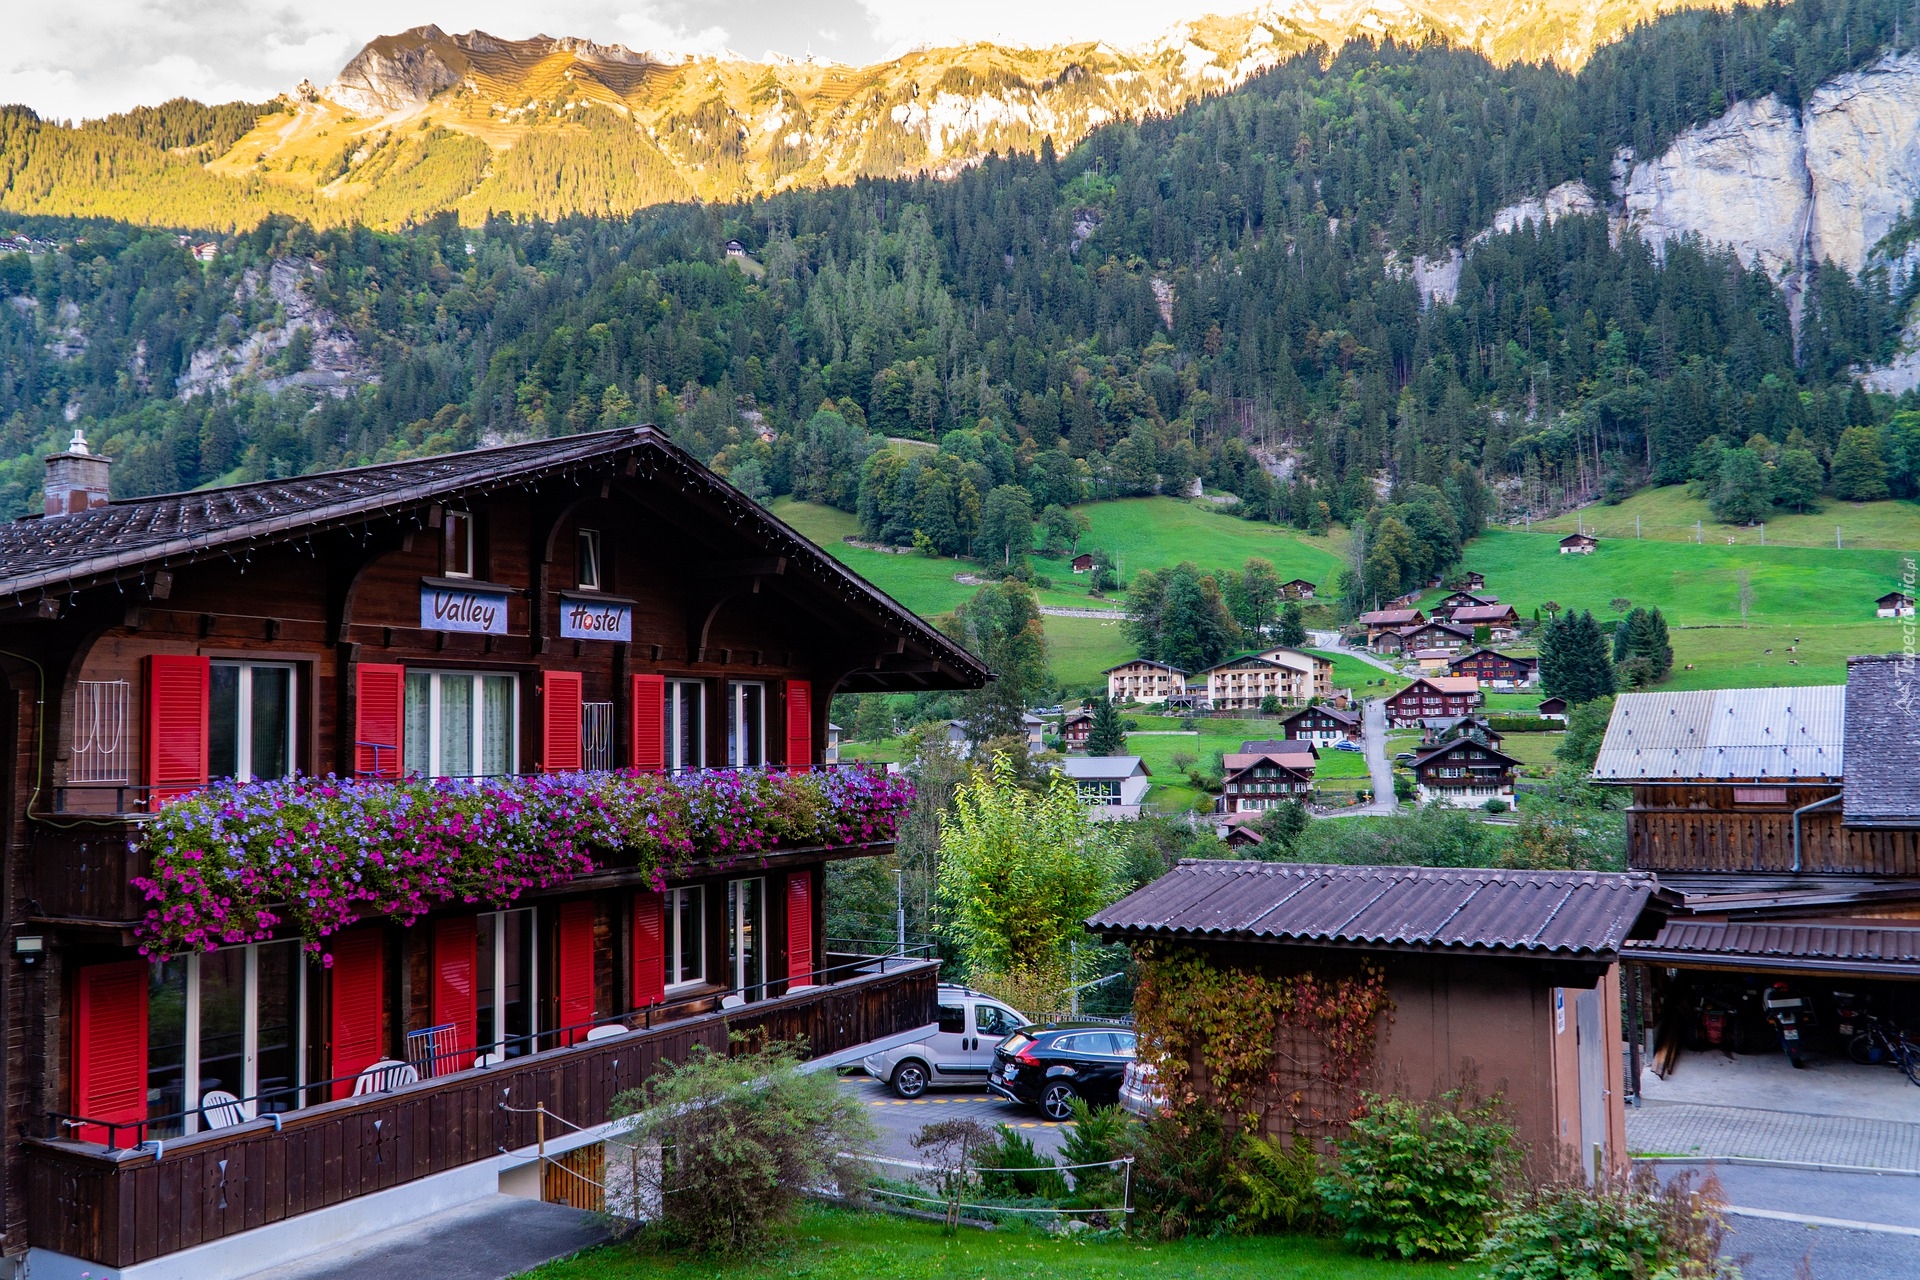 Dom, Hotel, Valley Hostel, Wioska Lauterbrunnen, Dolina, Góry, Alpy, Szwajcaria